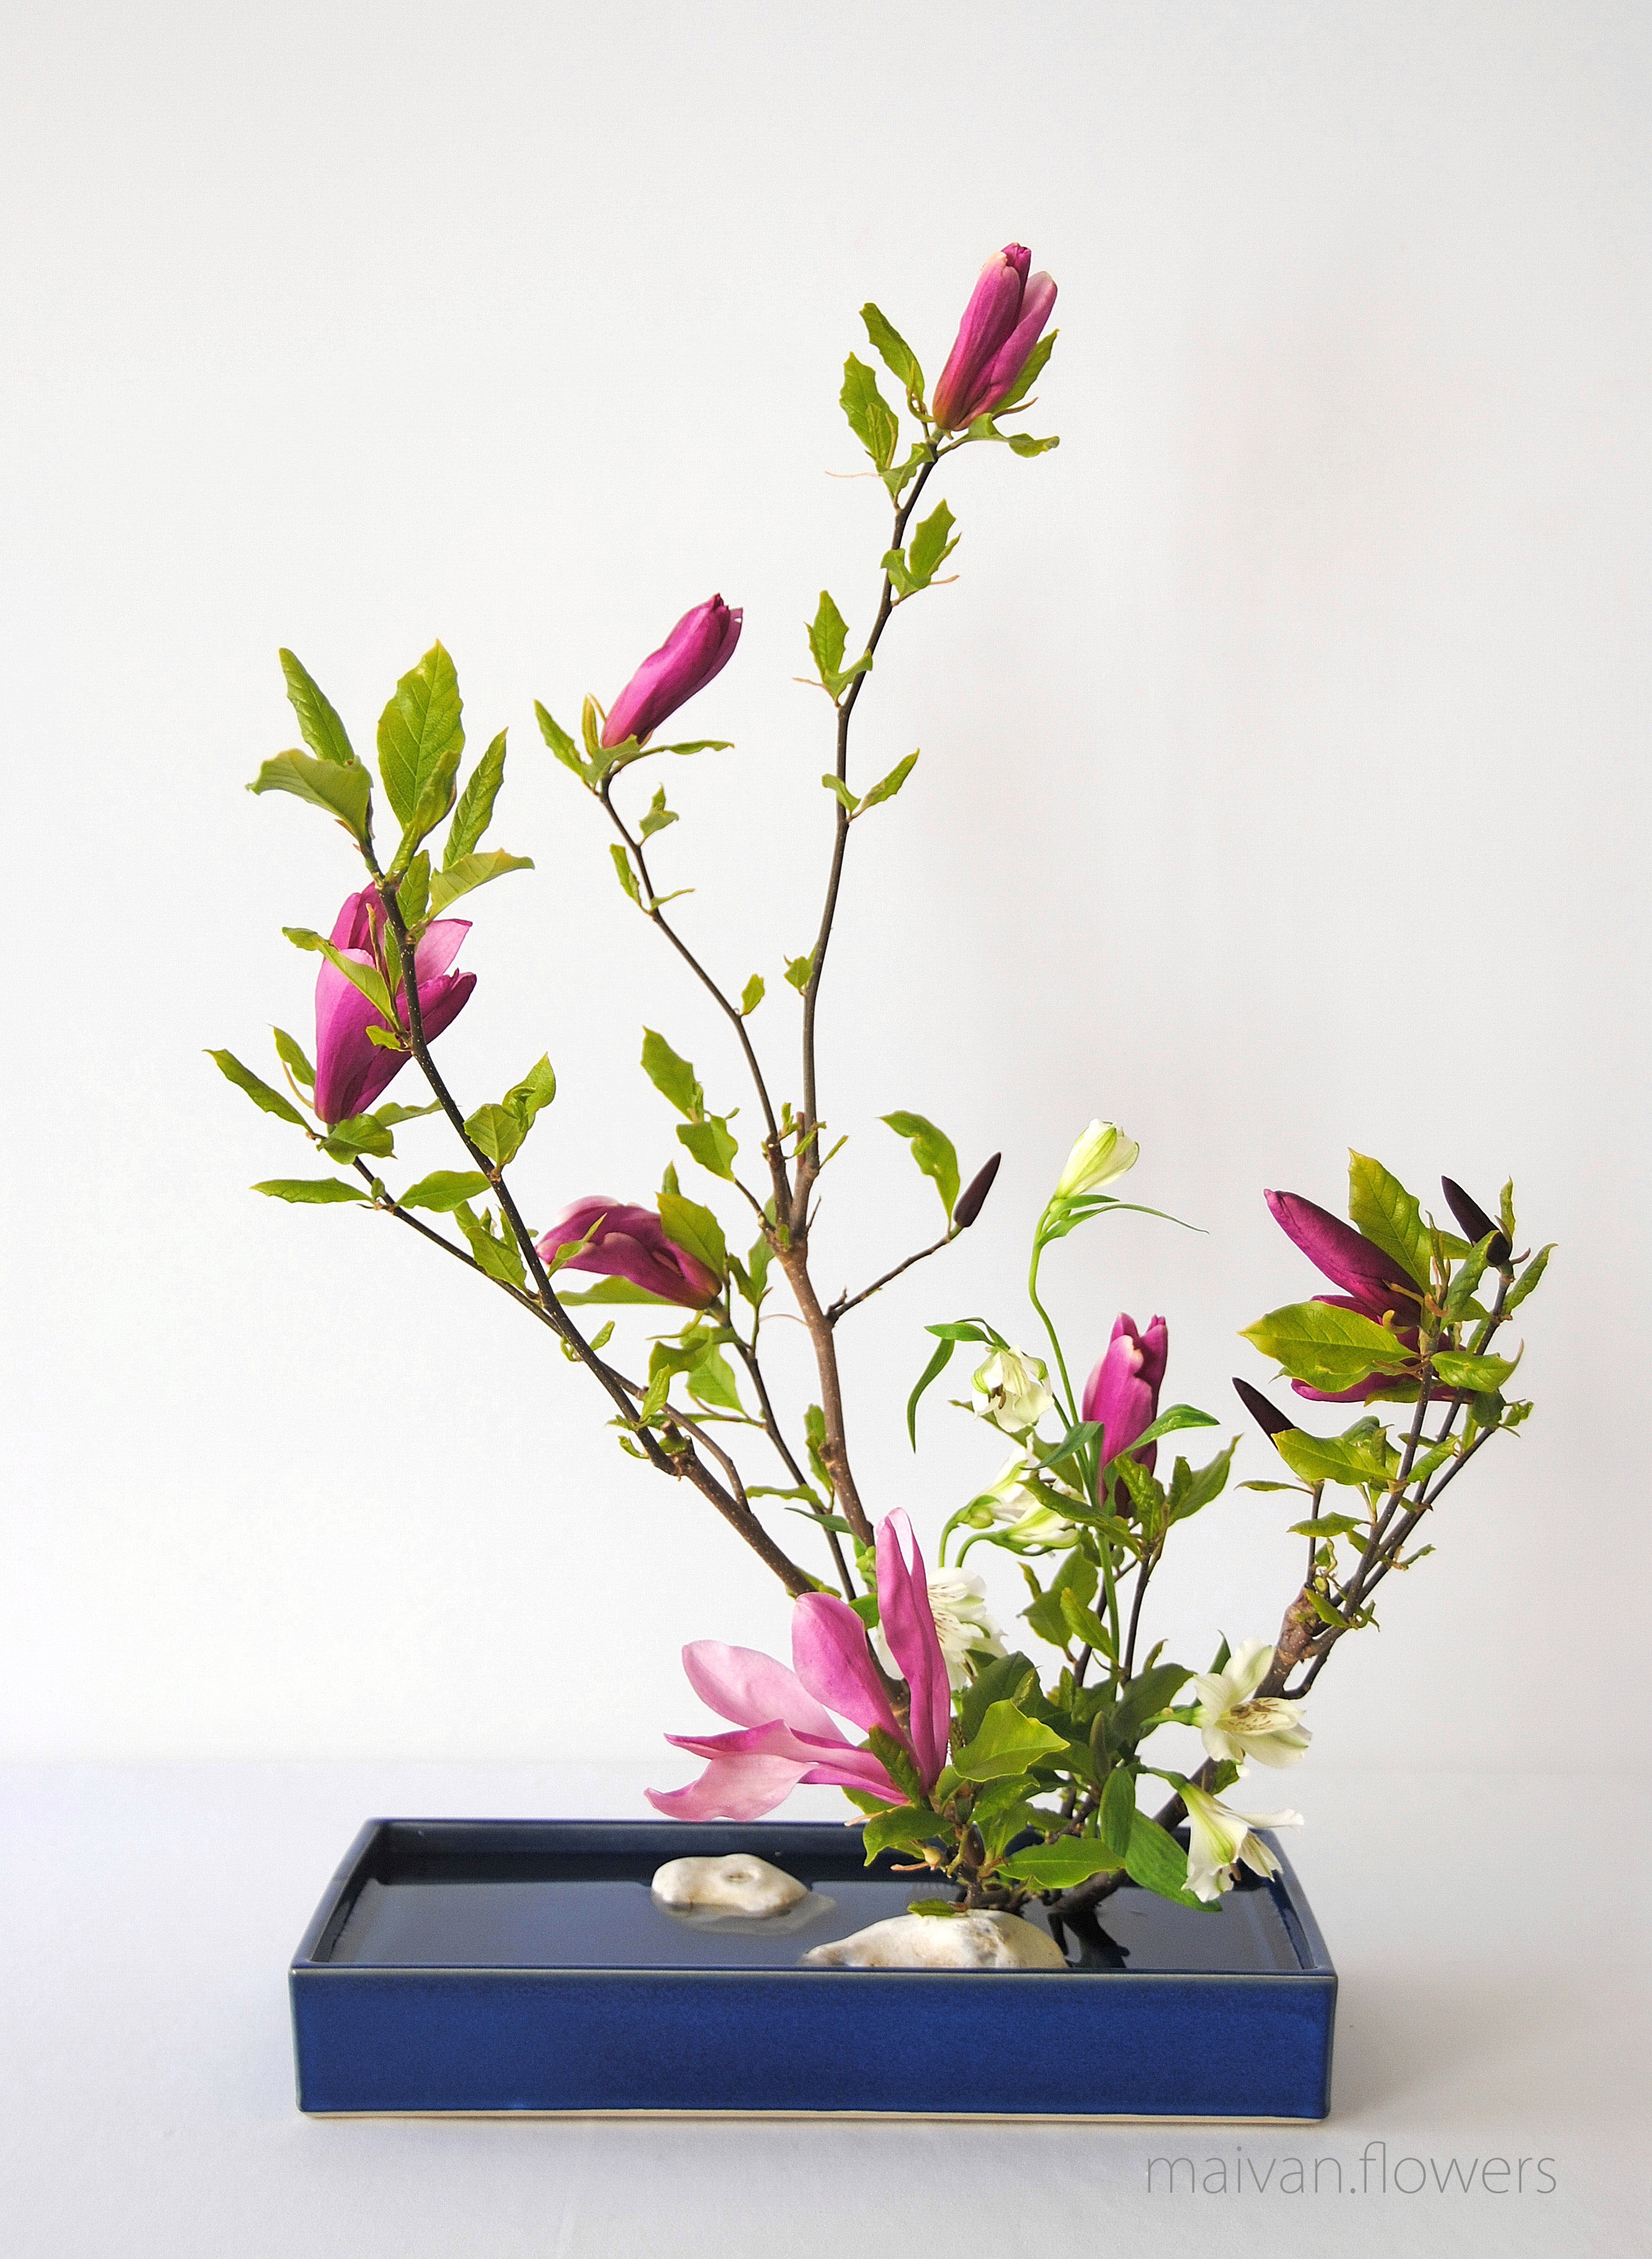 Moribana – maivan.flowers